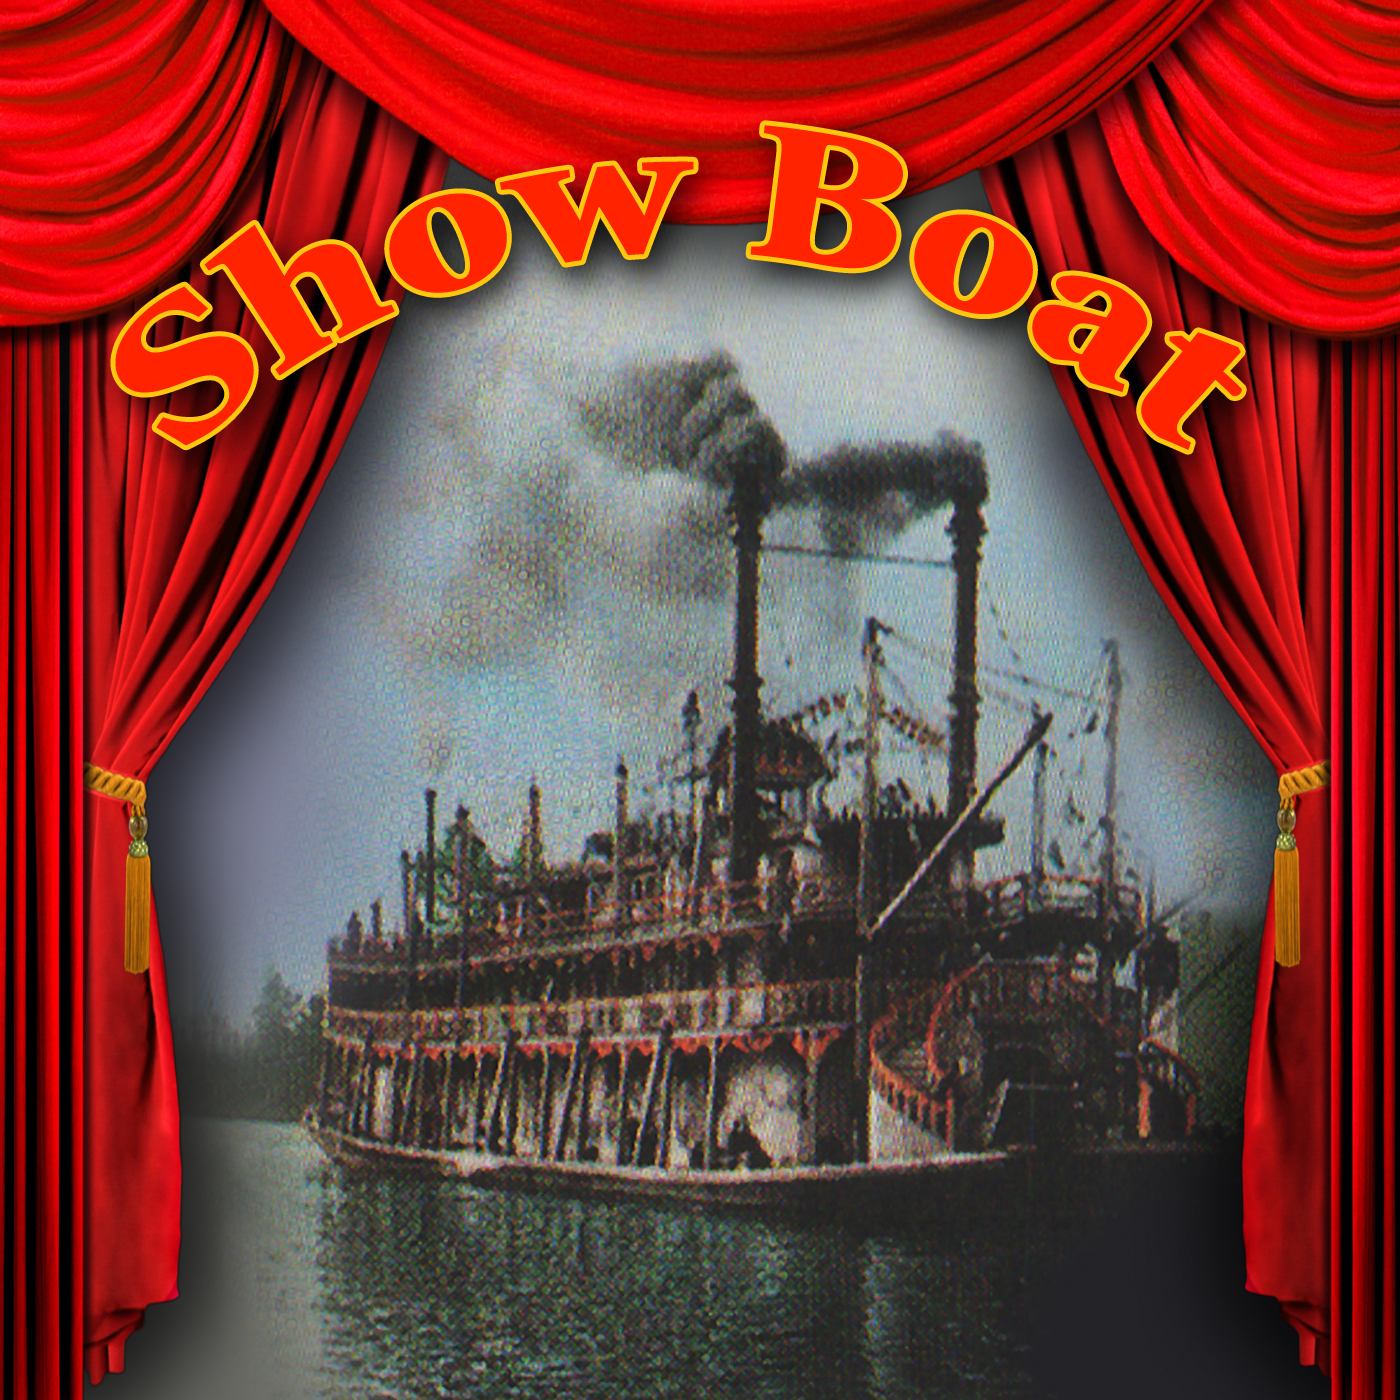 Showboat (original Motion Picture Soundtrack)